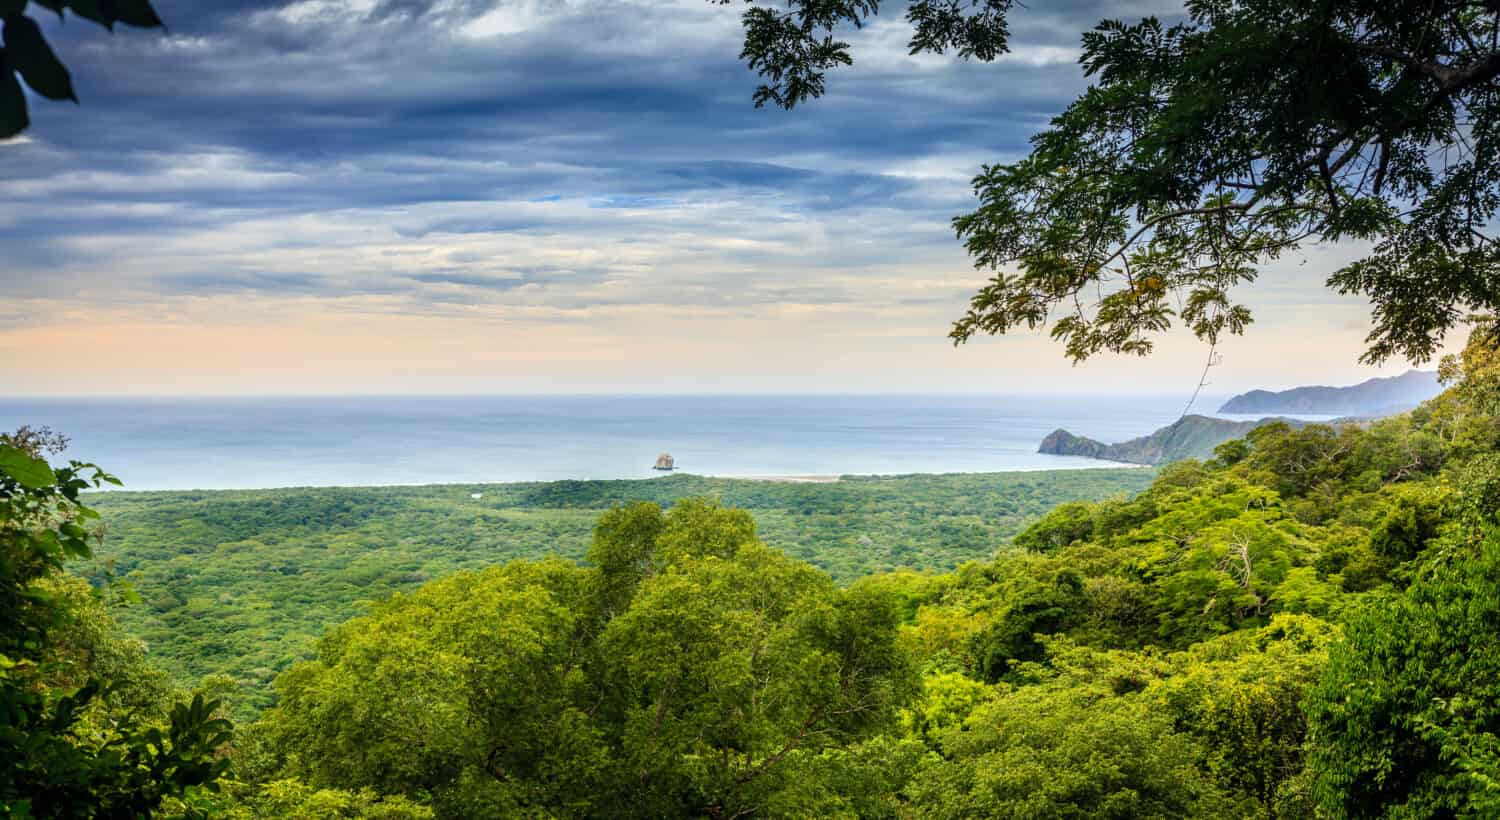 Overlook of Pacific coastline in Santa Rosa National Park in Costa Rica